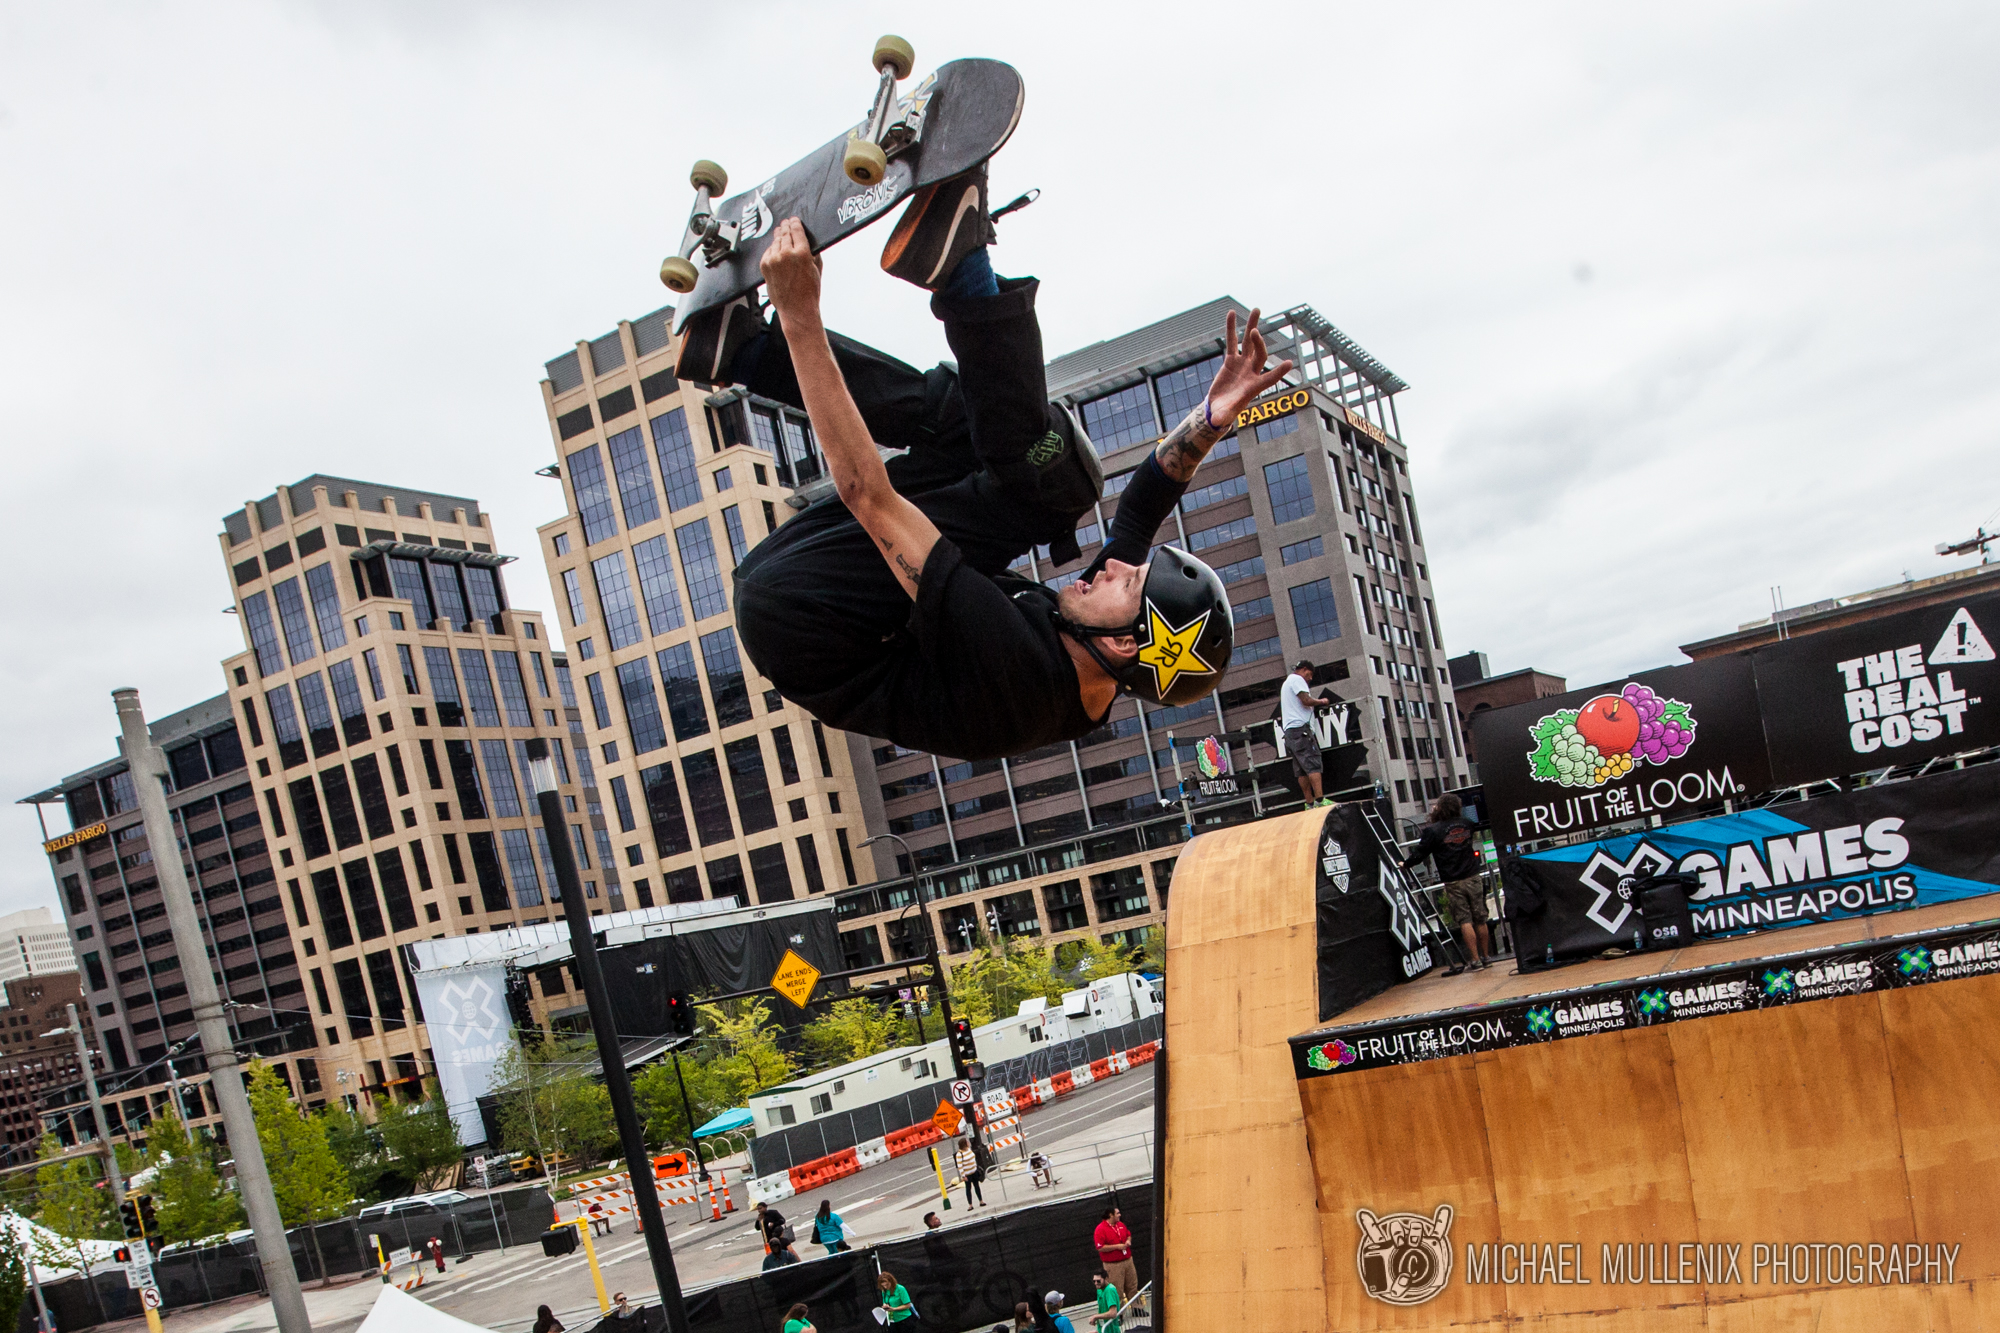 Skateboard Review X Games 2017 Minneapolis